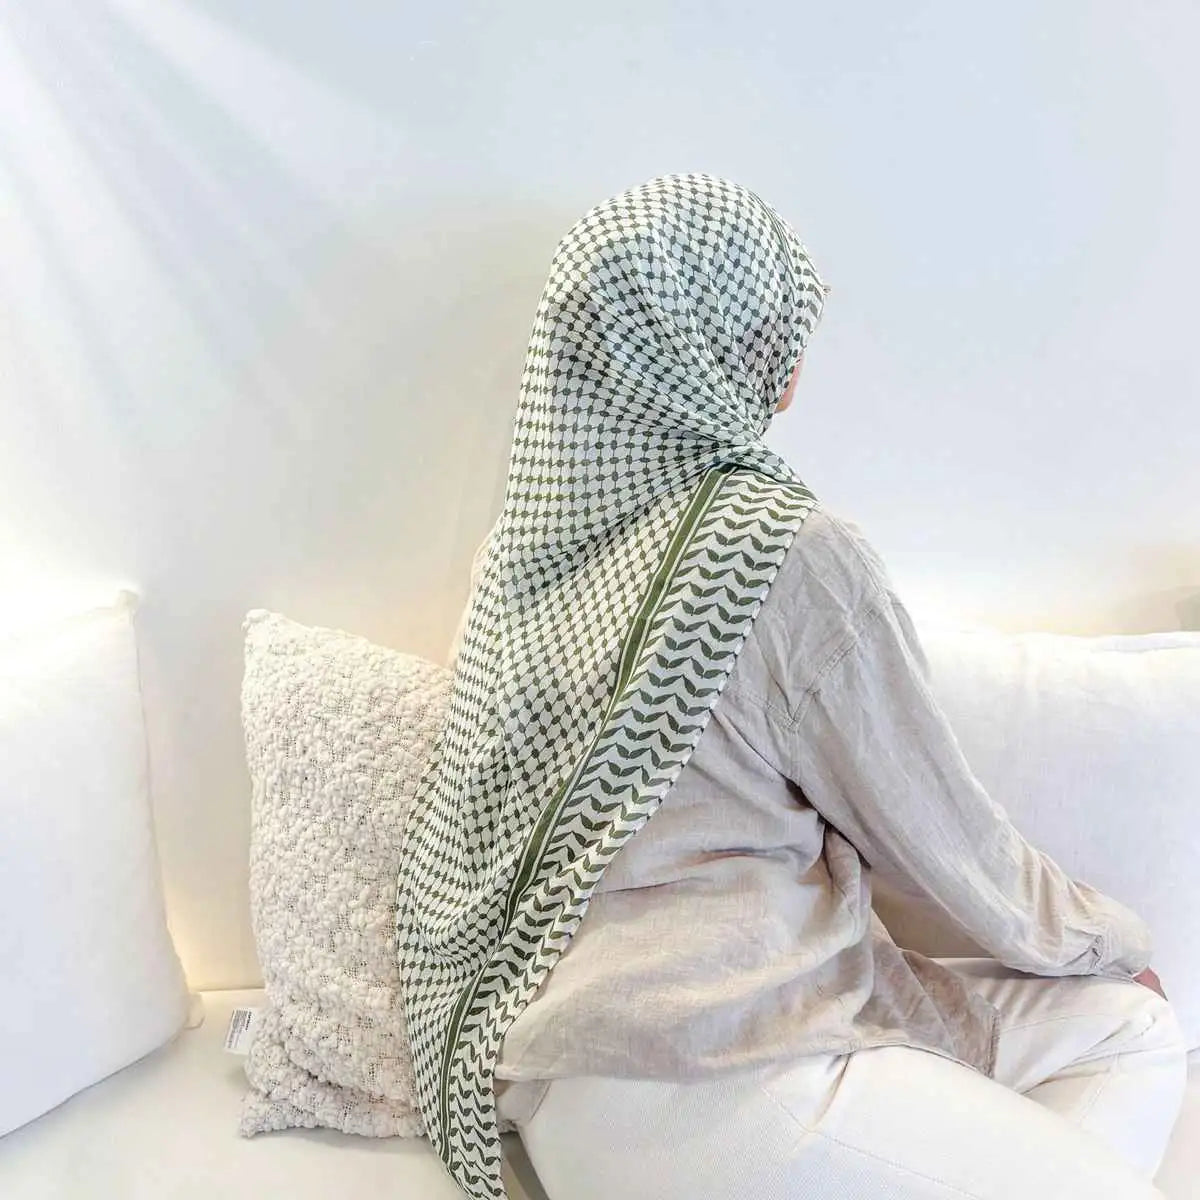 Palestine Keffiyeh Printed Chiffon Hijab Scarf Scarves